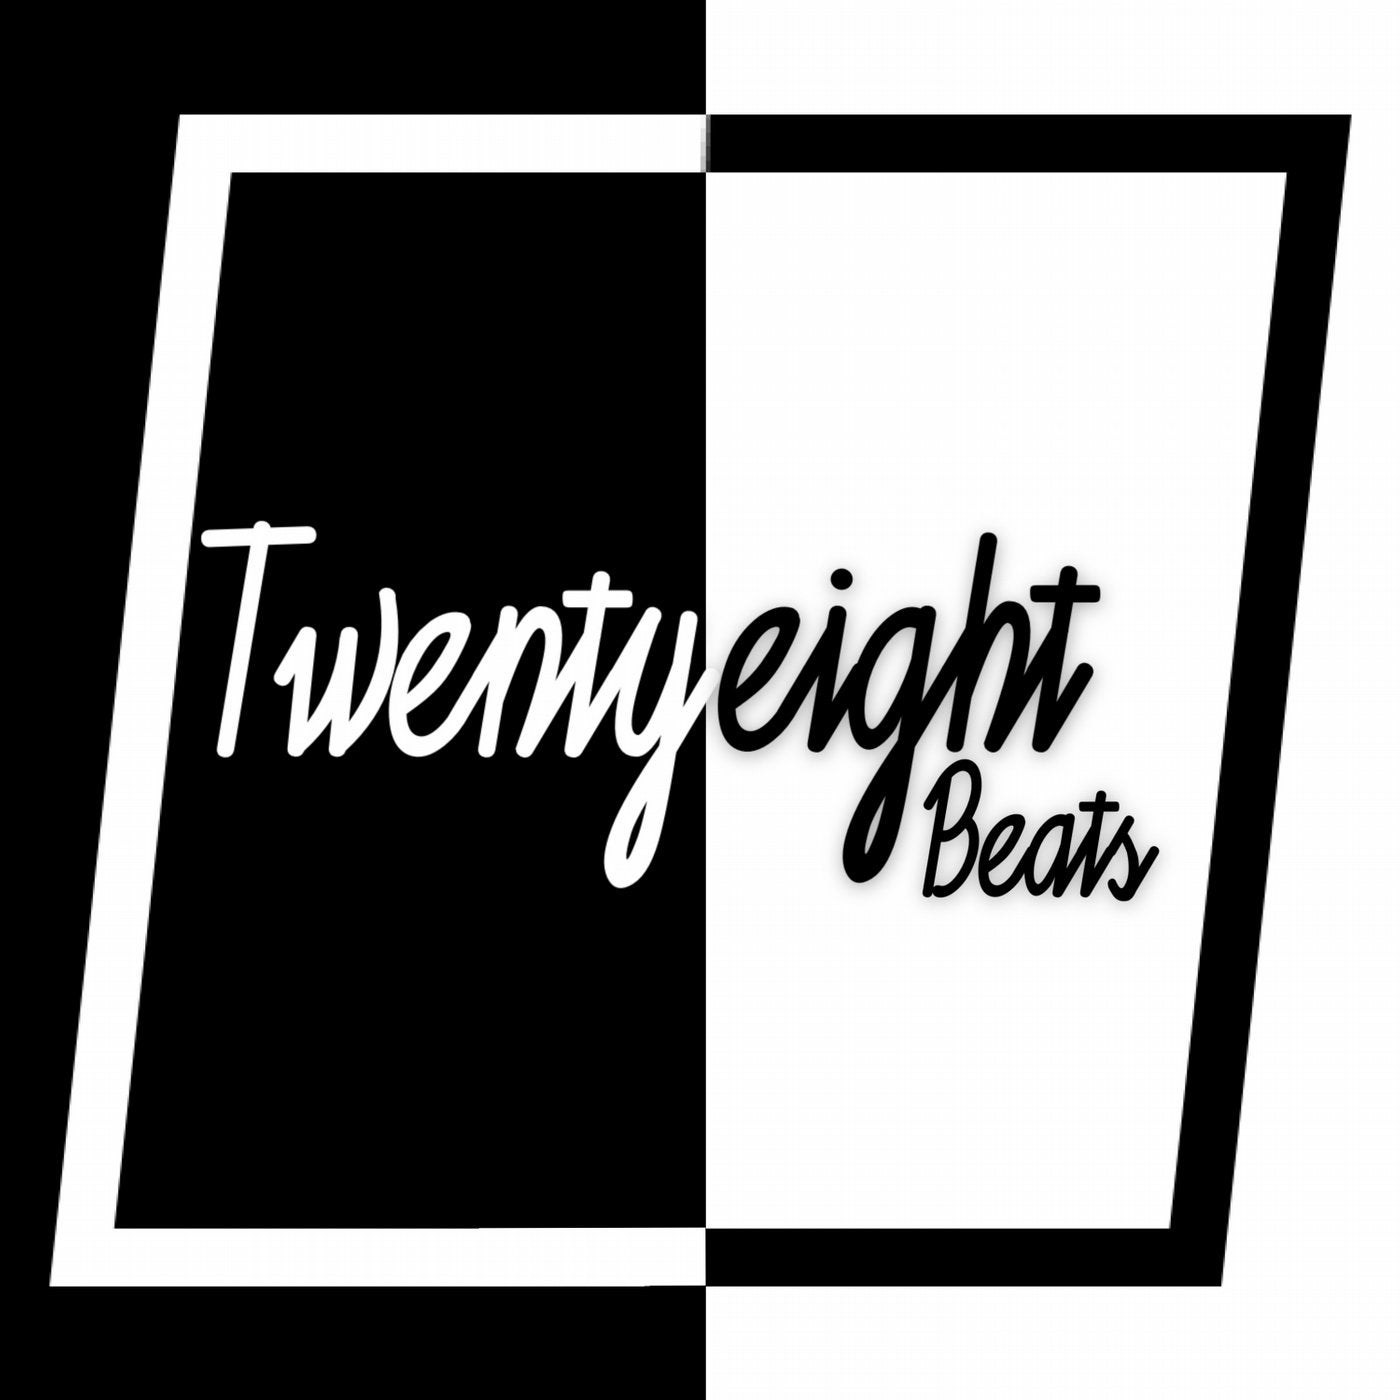 Twentyeight Beats